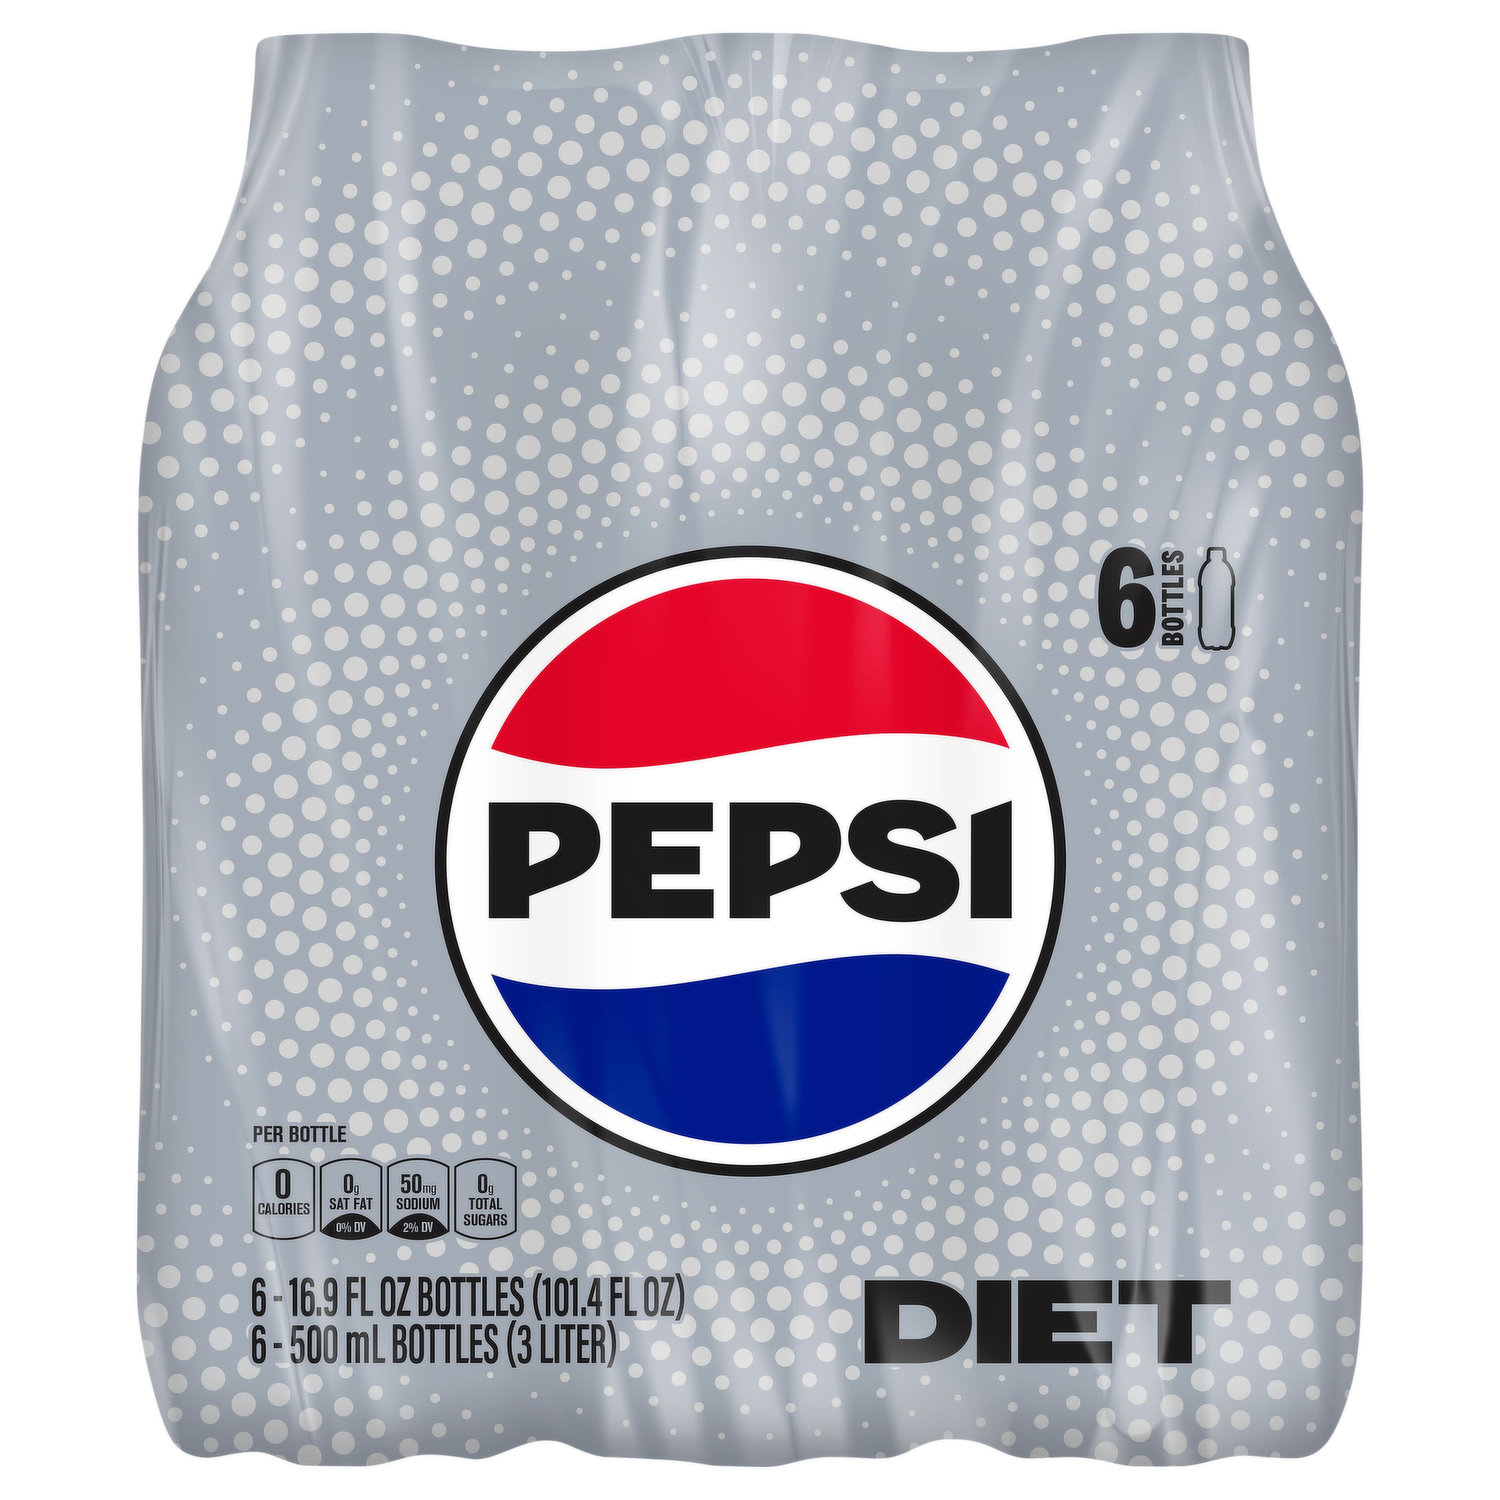  Pepsi Zero Calorie Variety Pack With Diet Pepsi/Diet